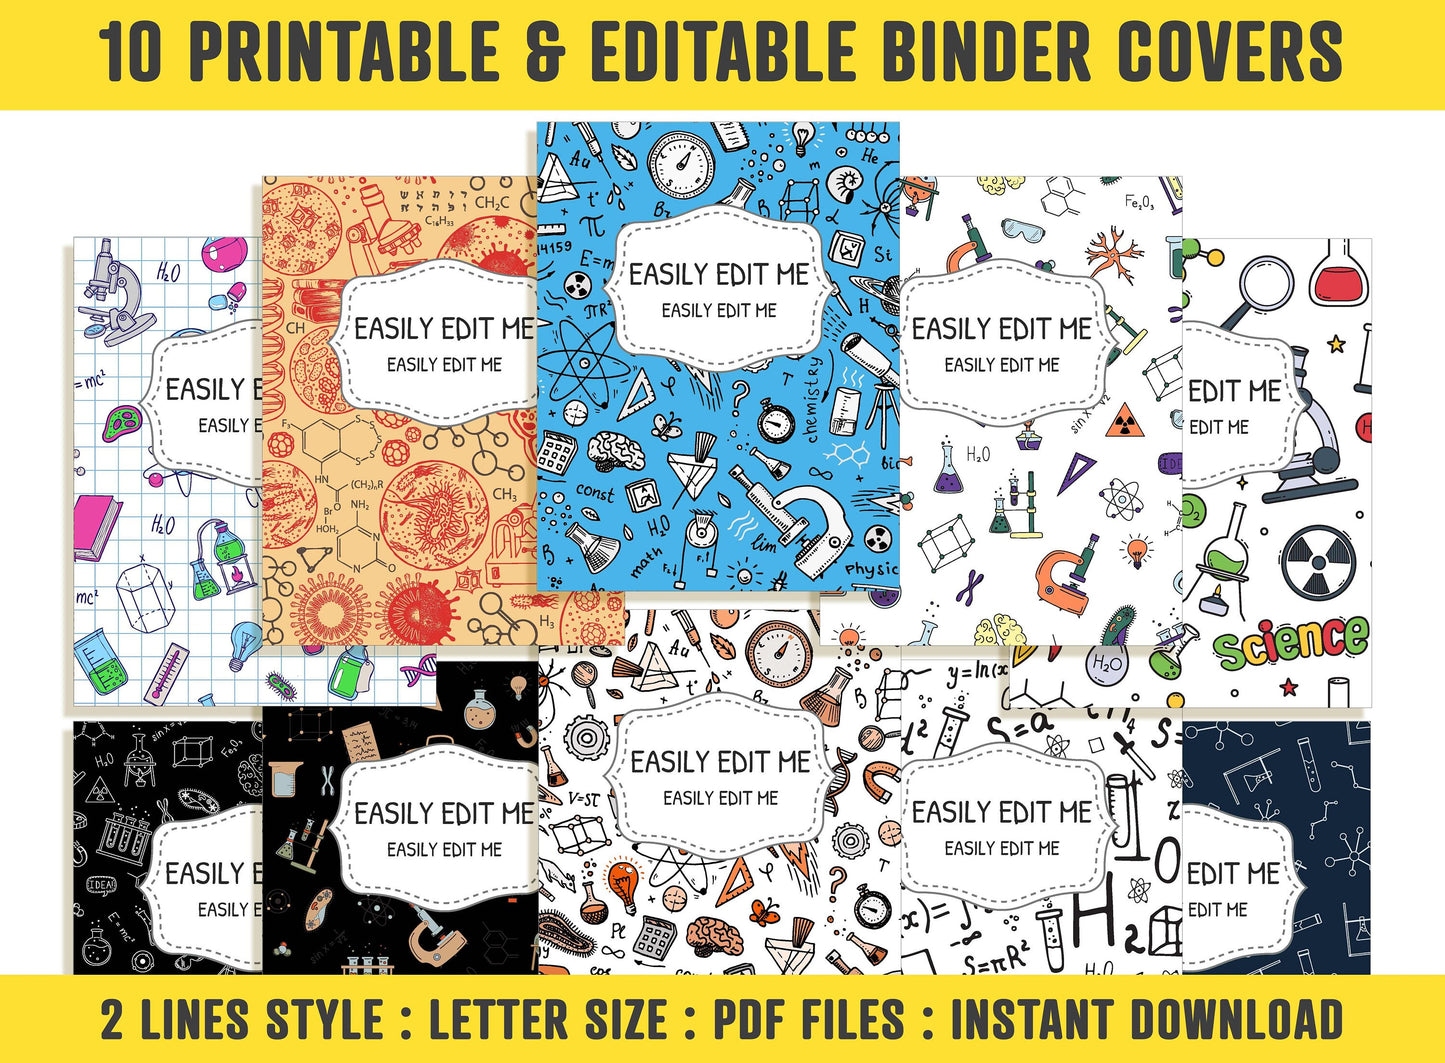 Printable Science Binder Cover, 10 Printable & Editable Binder Covers + Spines, Binder Inserts, Teacher/School Planner Cover Template